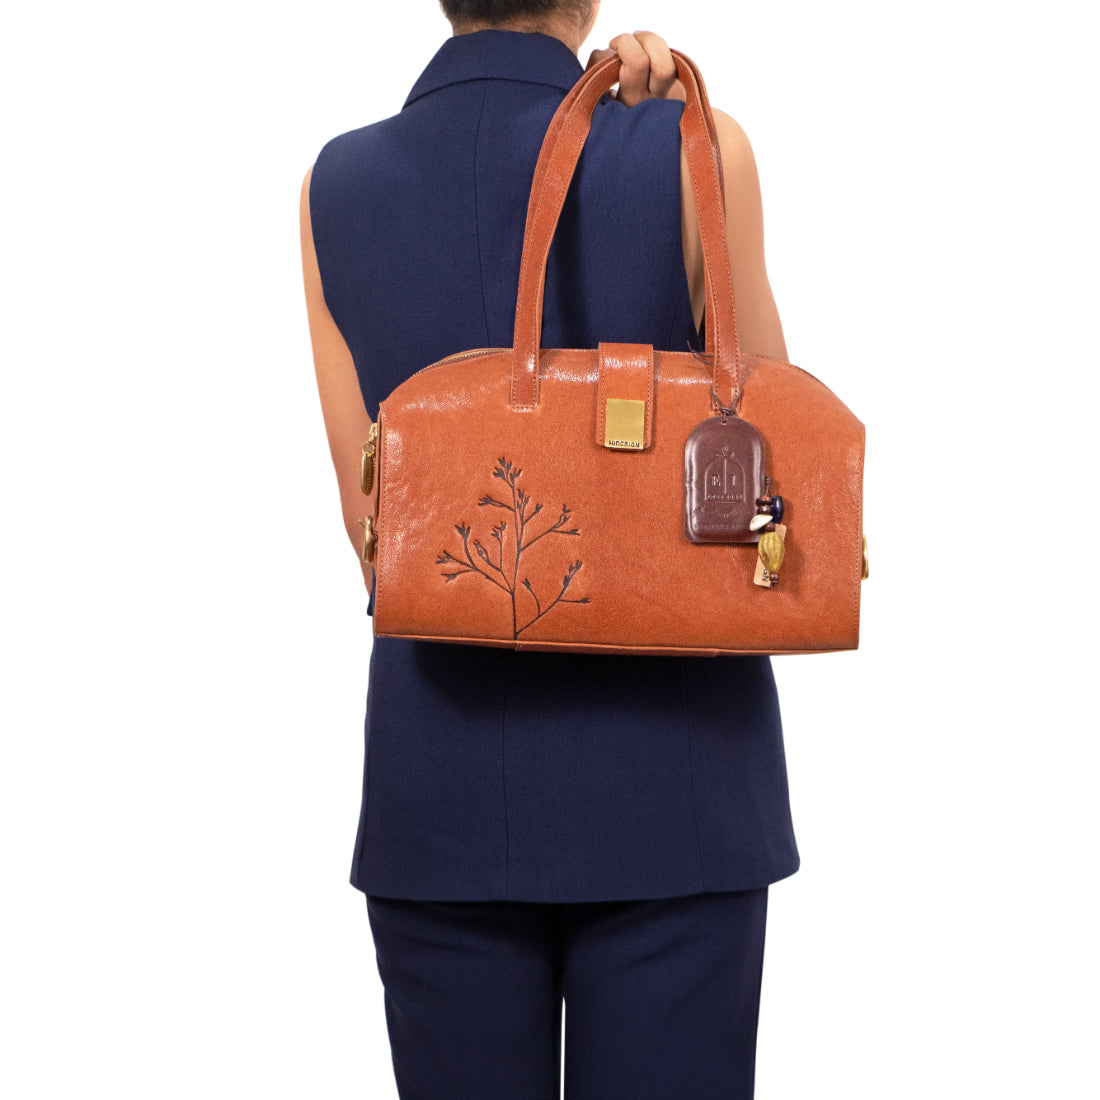 Designer Handbags Online Store: Shop Spring-Summer 2021 Fashion Bags